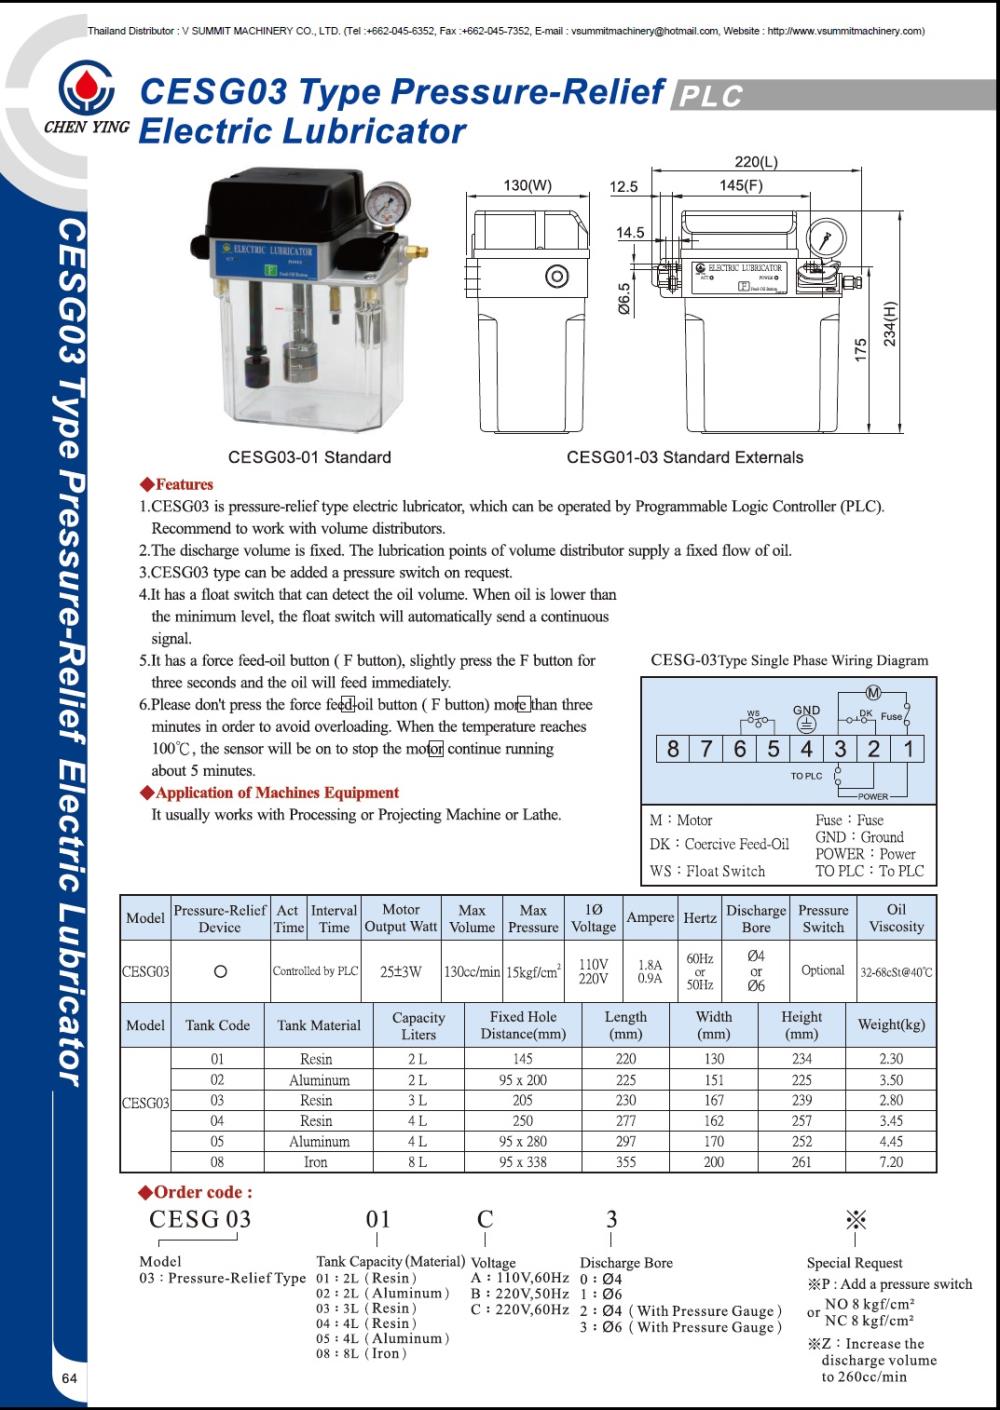 CESG03 Type Pressure-Relief Electric Lubricator, ปั๊มน้ำมันประเภทแรงดันระบบ PLC, ปั๊มน้ำมันออโต้ประเภทแรงดันระบบ PLC, เครื่องจ่ายน้ำมันประเภทแรงดันระบบ PLC, เครื่องจ่ายน้ำมันออโต้ประเภทแรงดันระบบ PLC, กาน้ำมันประเภทแรงดันระบบ PLC, กาจ่ายน้ำมันออโต้ประเภทแรงดันระบบ PLC, กาน้ำมันออโต้ประเภทแรงดันระบบ PLC, ปั๊มน้ำมันไฟฟ้าประเภทแรงดันระบบ PLC, เครื่องจ่ายน้ำมันไฟฟ้าประเภทแรงดันระบบ PLC, กาน้ำมันไฟฟ้าประเภทแรงดันระบบ PLC 